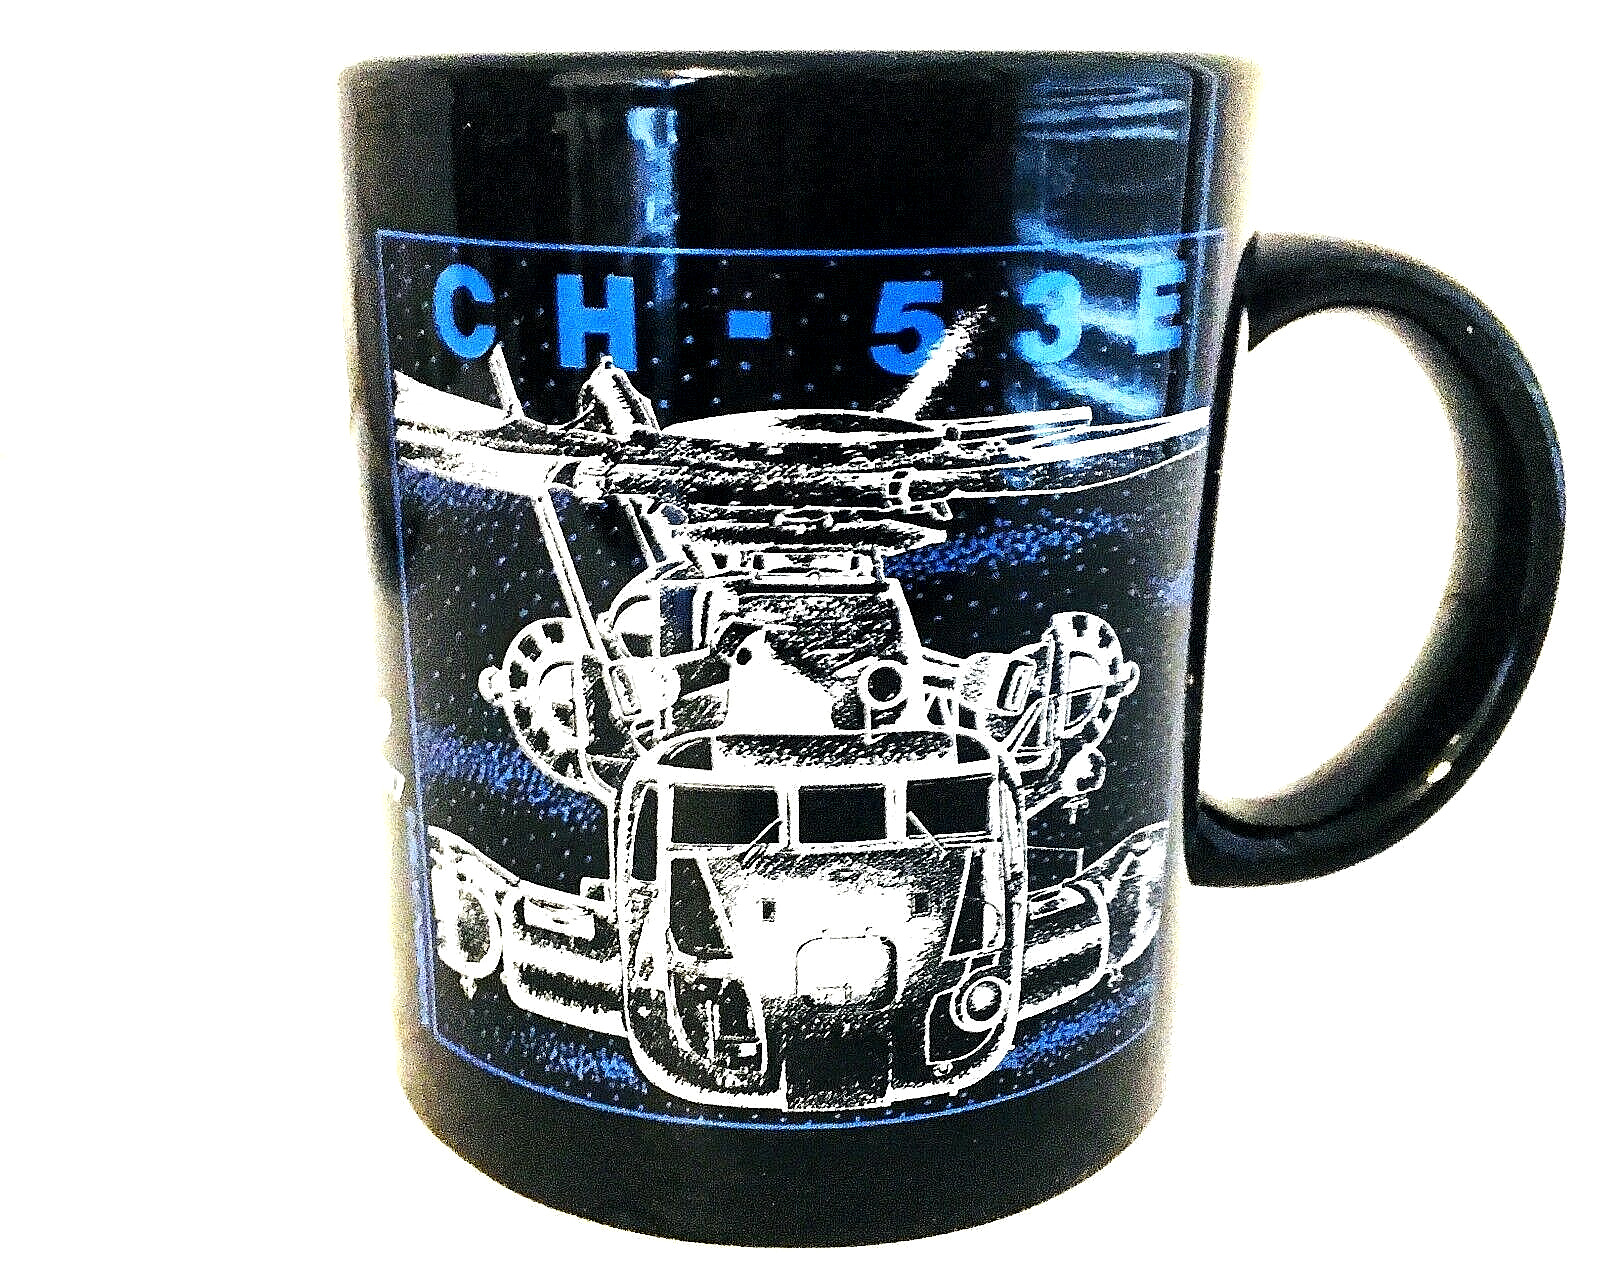 Sikorsky CH-53E Super Stallion Blackbird Mug Black Ceramic w/ White & BLue 10 oz